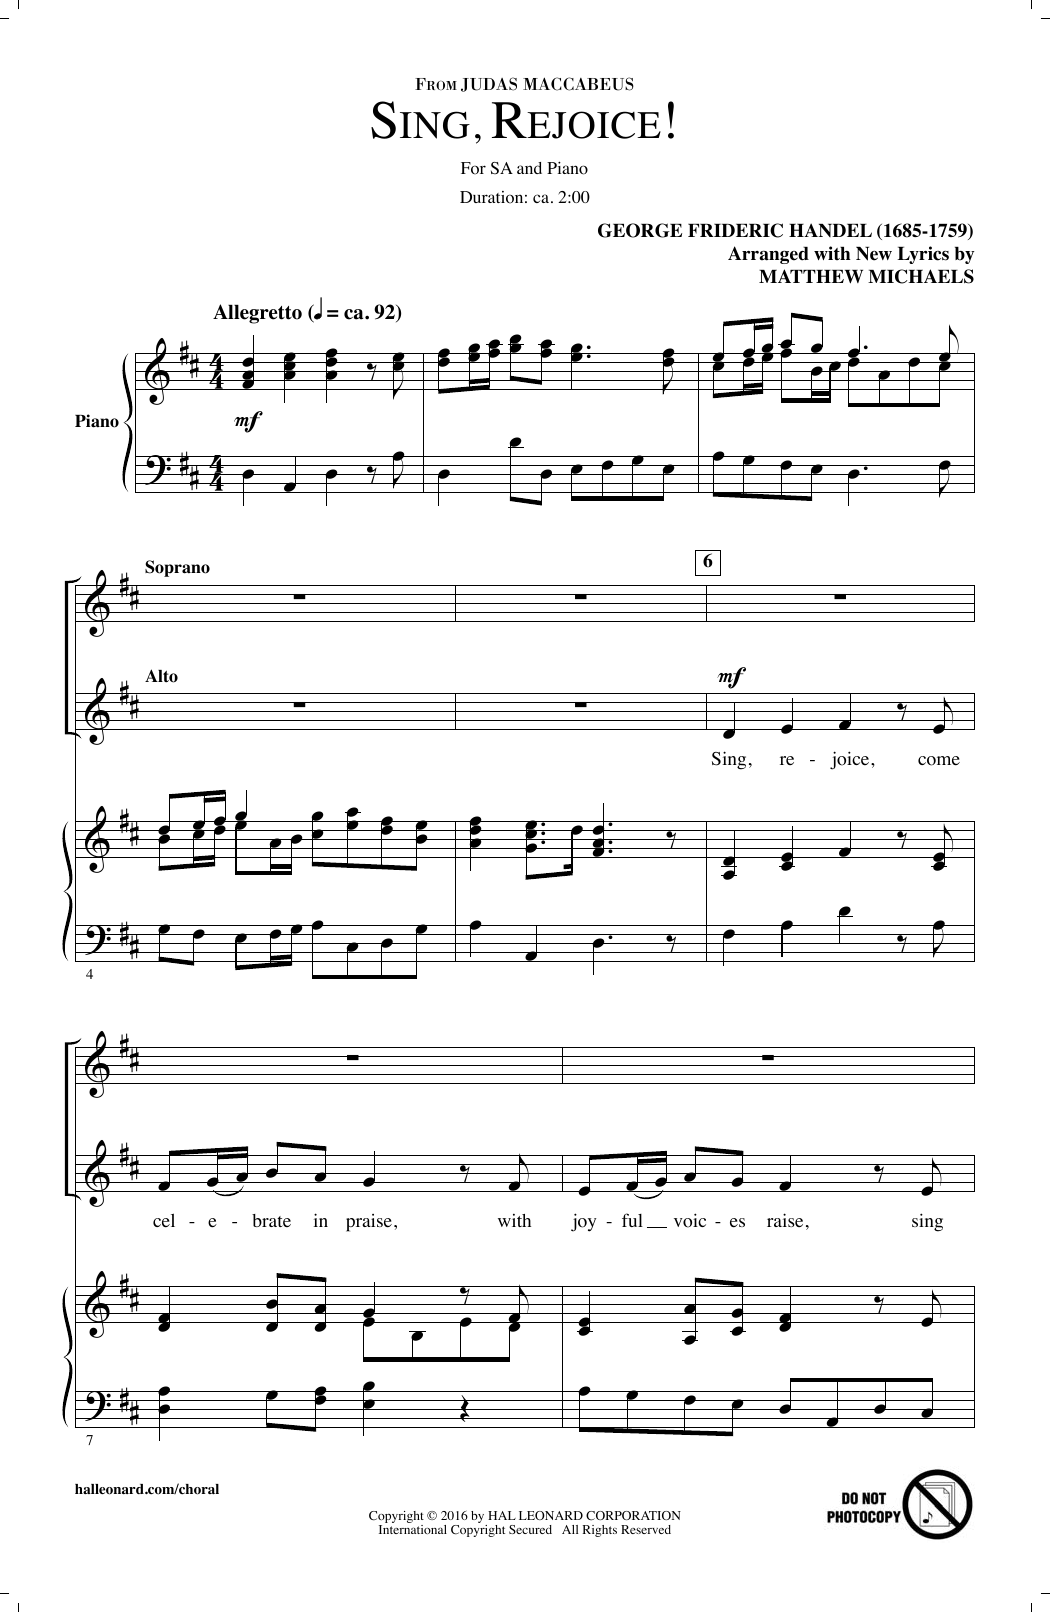 Matthew Michaels Sing, Rejoice! (from Judas Maccabaeus) sheet music notes and chords arranged for SAB Choir